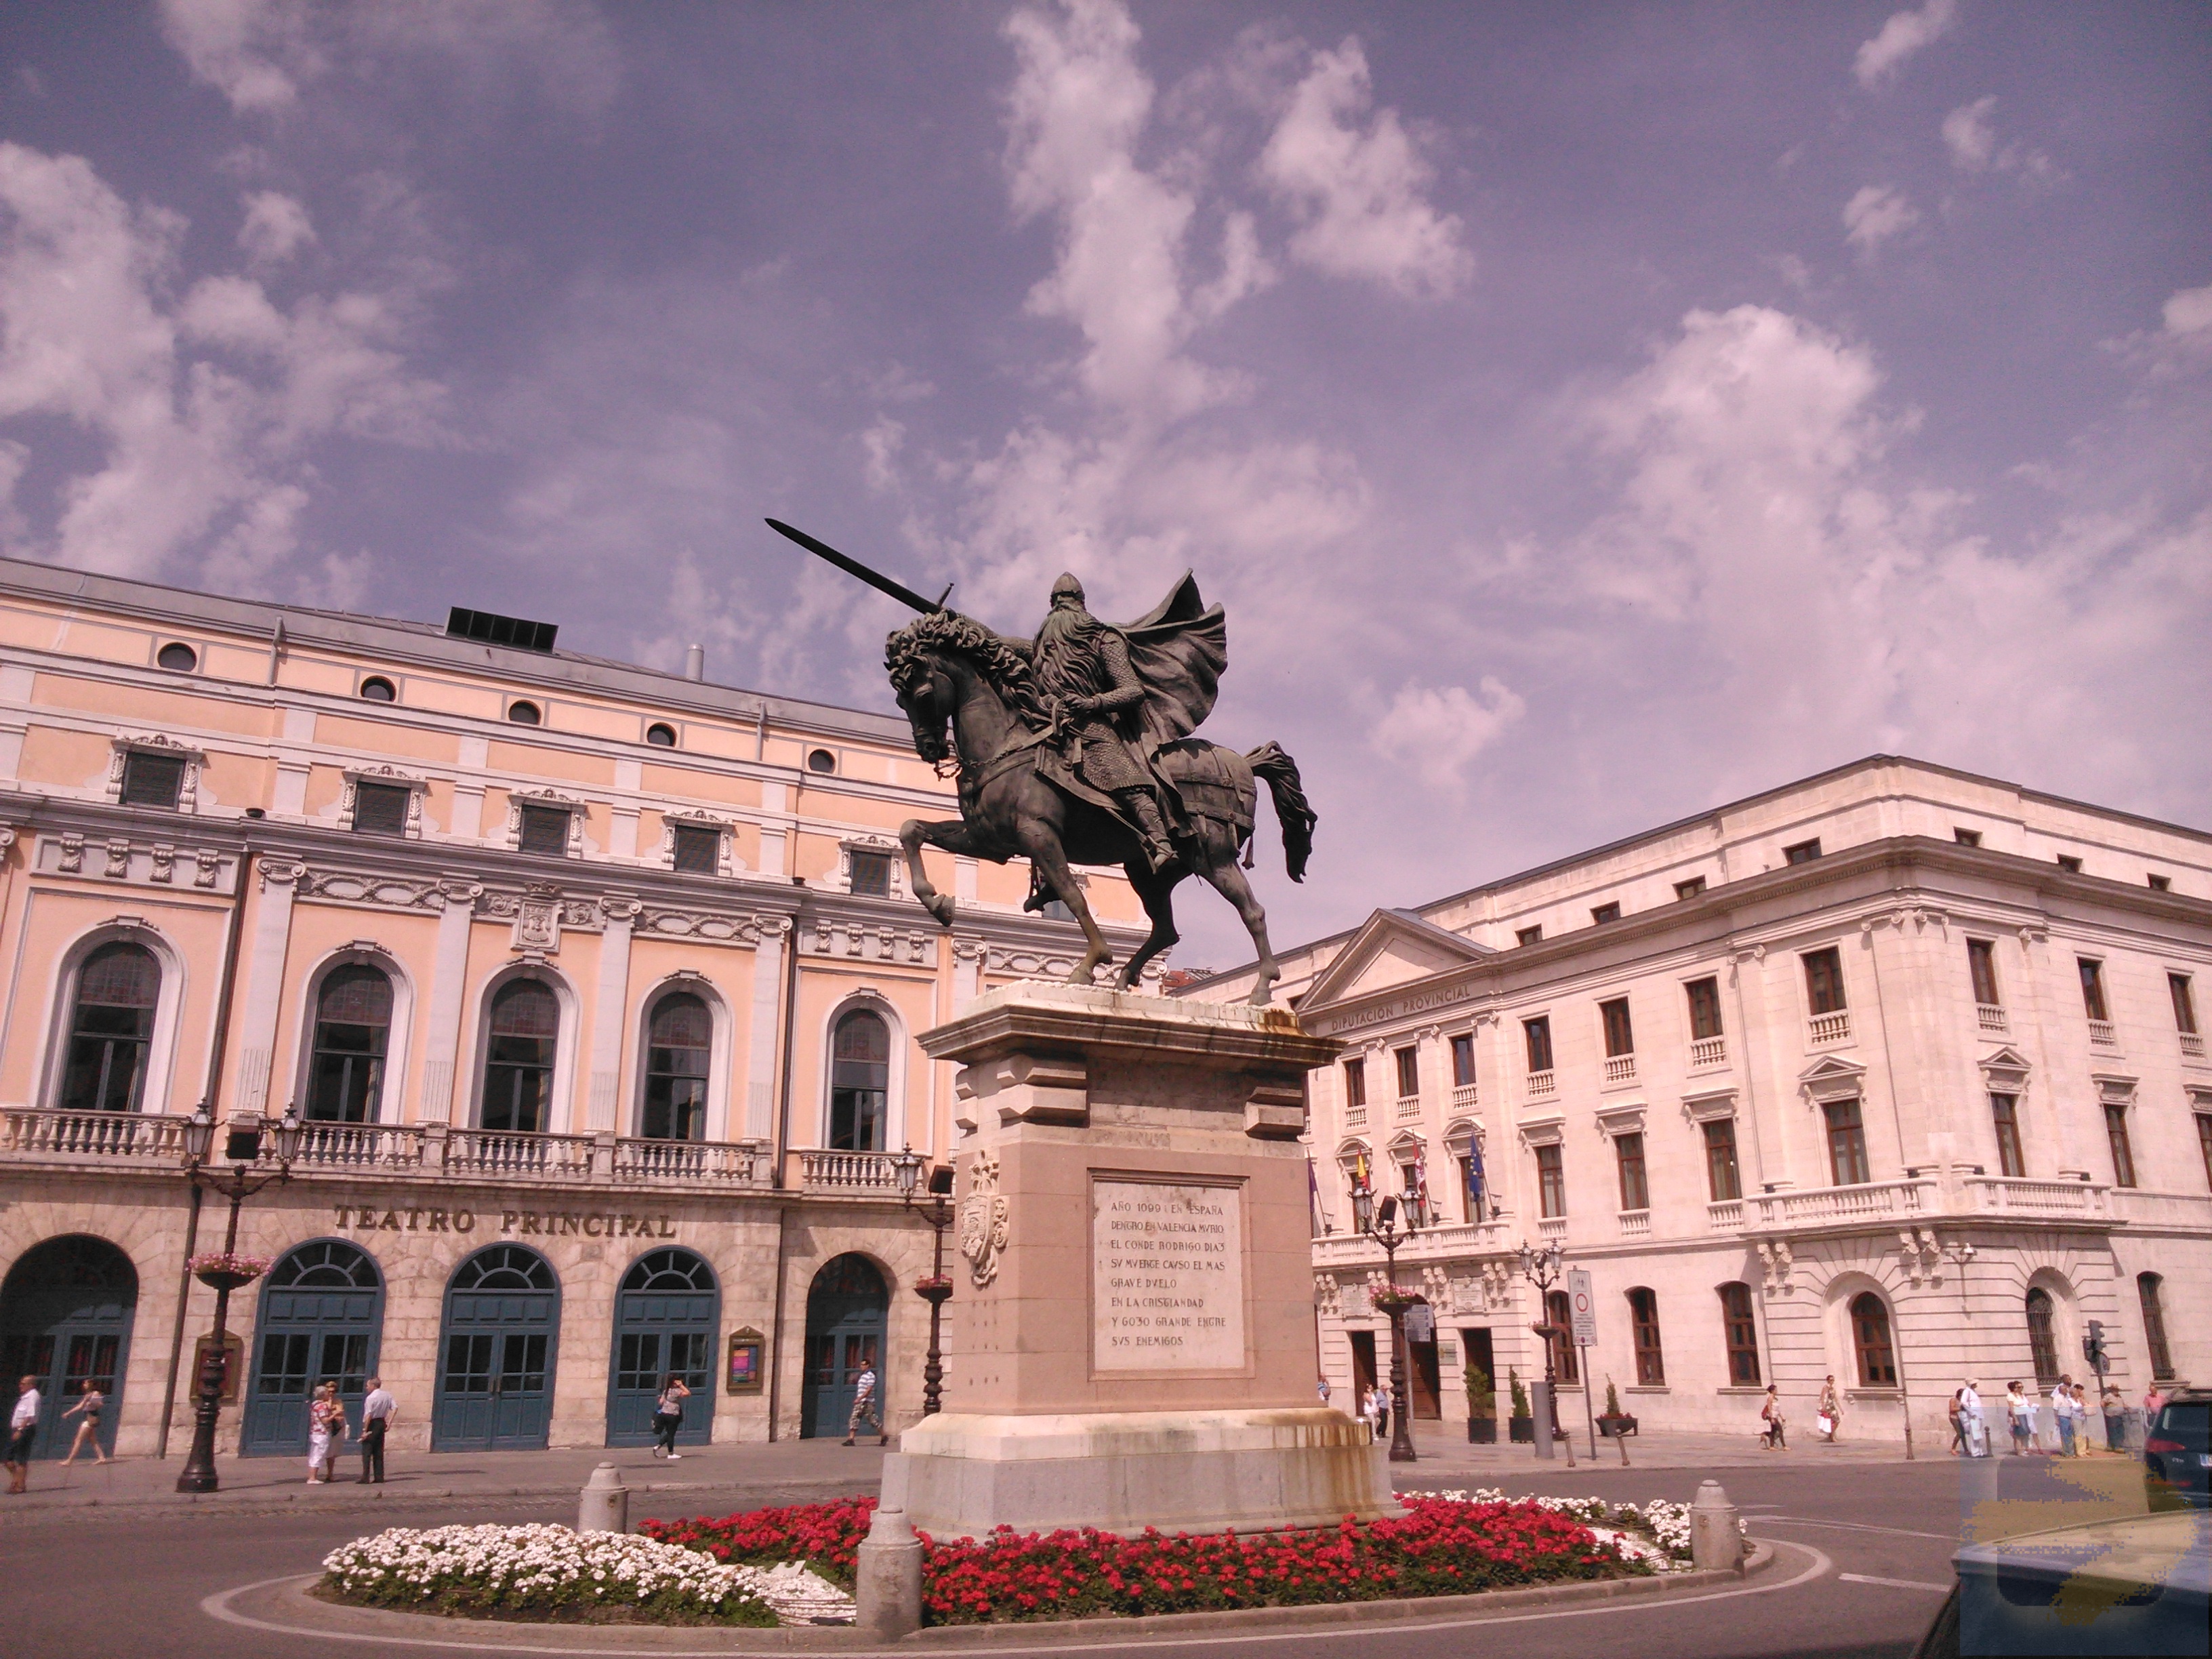 Statue of Burgos - July 2014